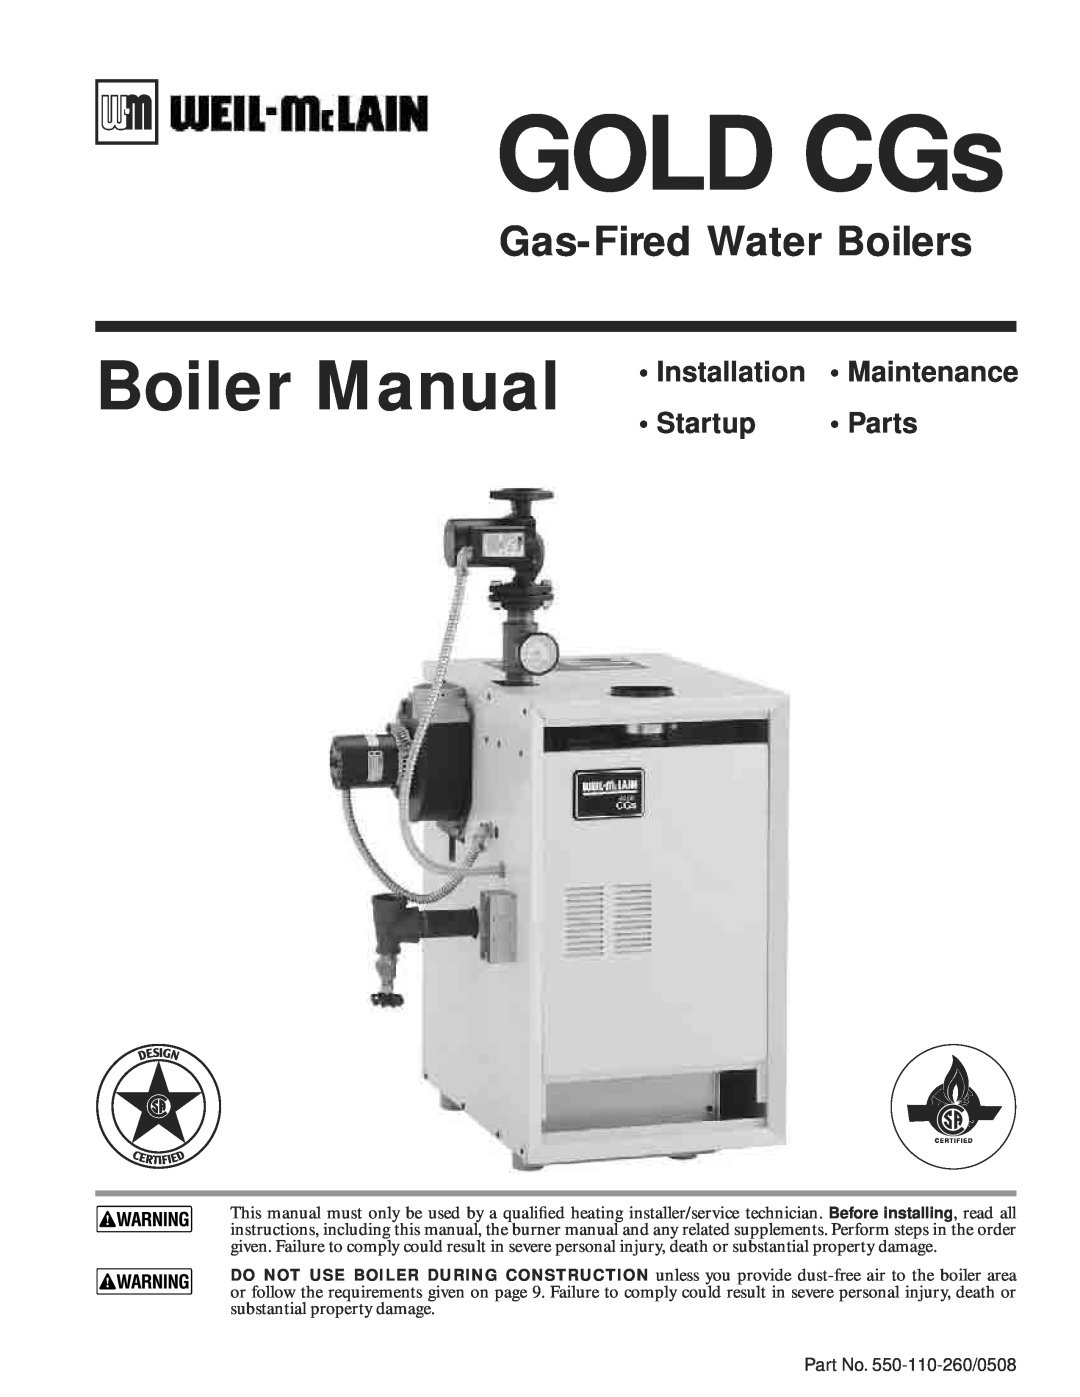 Weil-McLain 550-110-260/0508 manual Boiler Manual • Installation • Maintenance, • Startup • Parts, GOLD CGs 